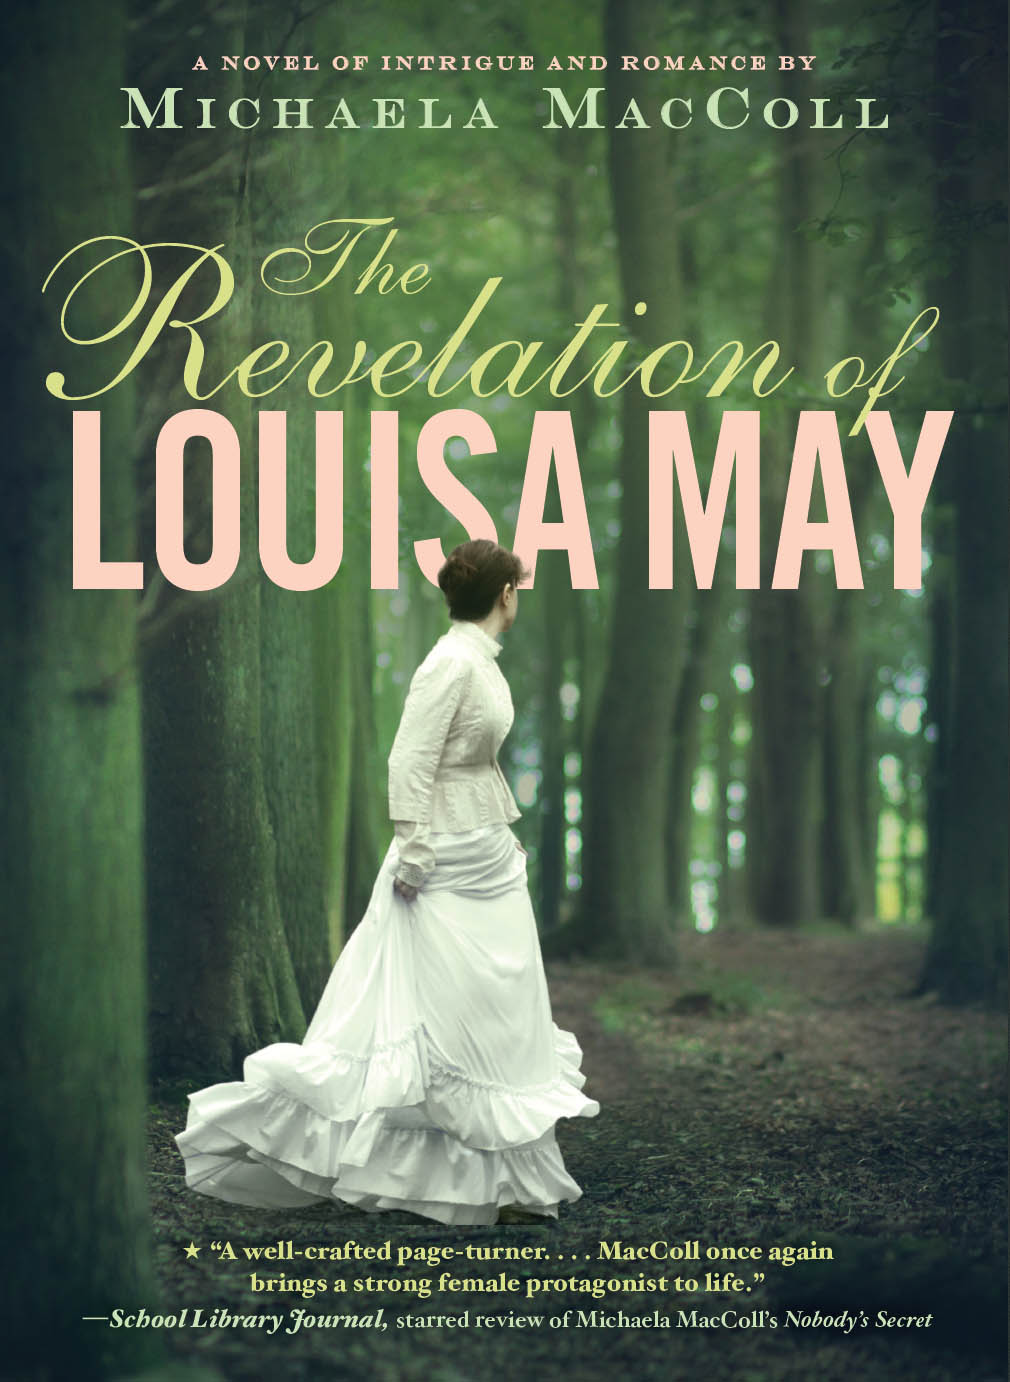 The Revelation of Louisa May (2015) by Michaela MacColl